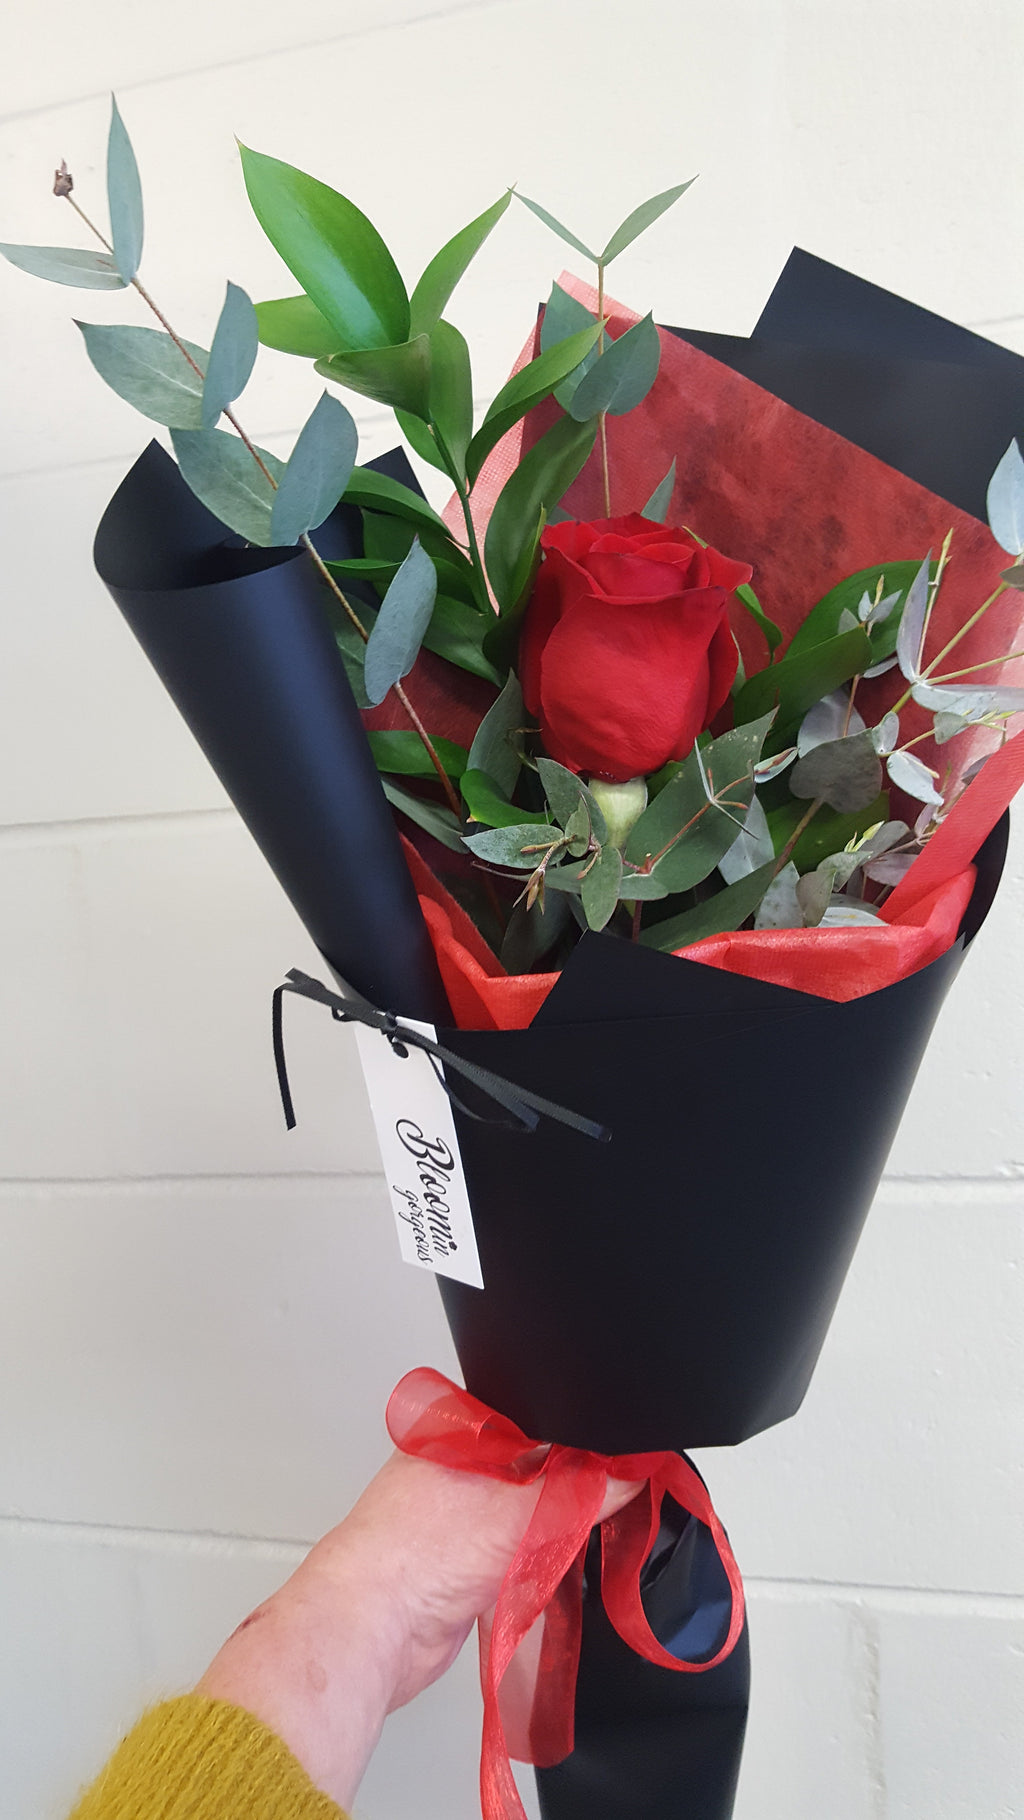 Single wrapped rose